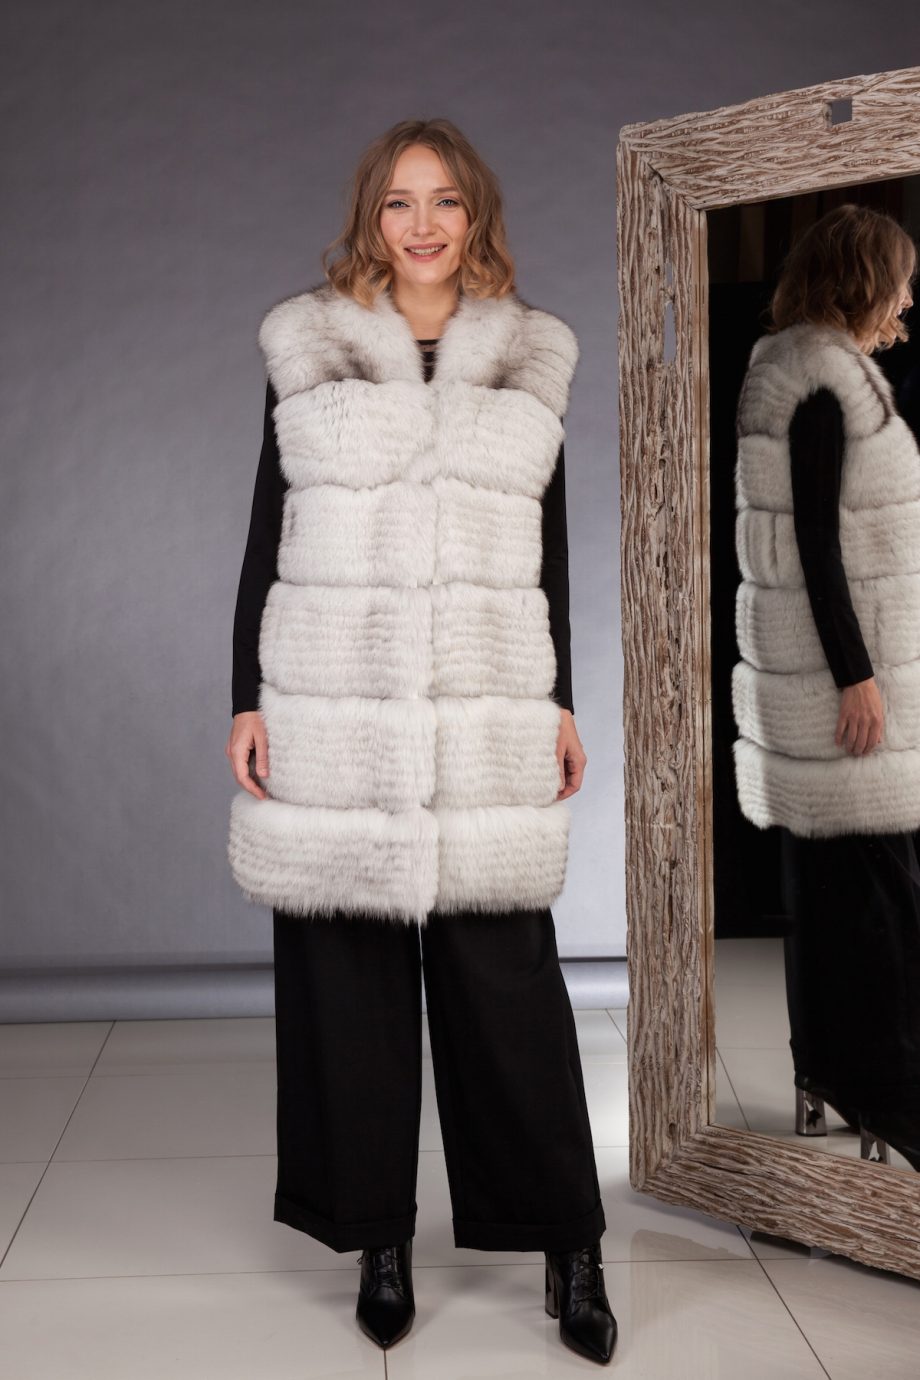 High quality northern fox fur vest made by SILTA MADA fur studio in Vilnius